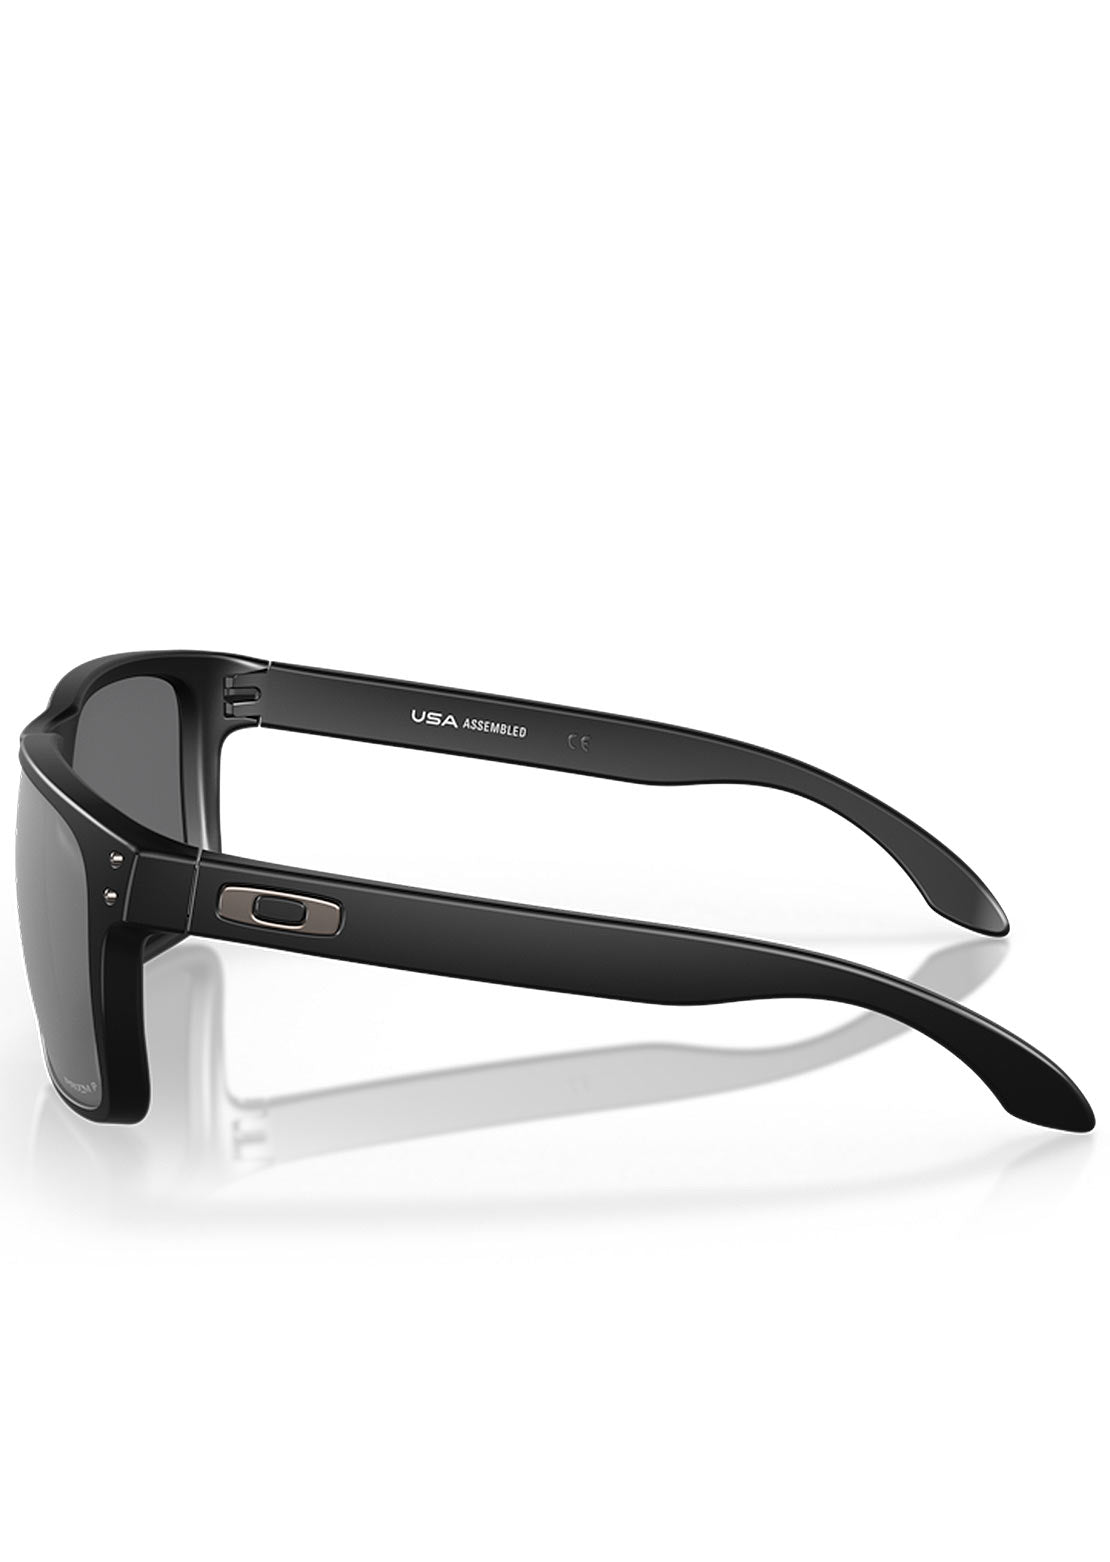 Oakley Men's Holbrook O Matter® Wayfarer Glare and UV Protection Sunglasses